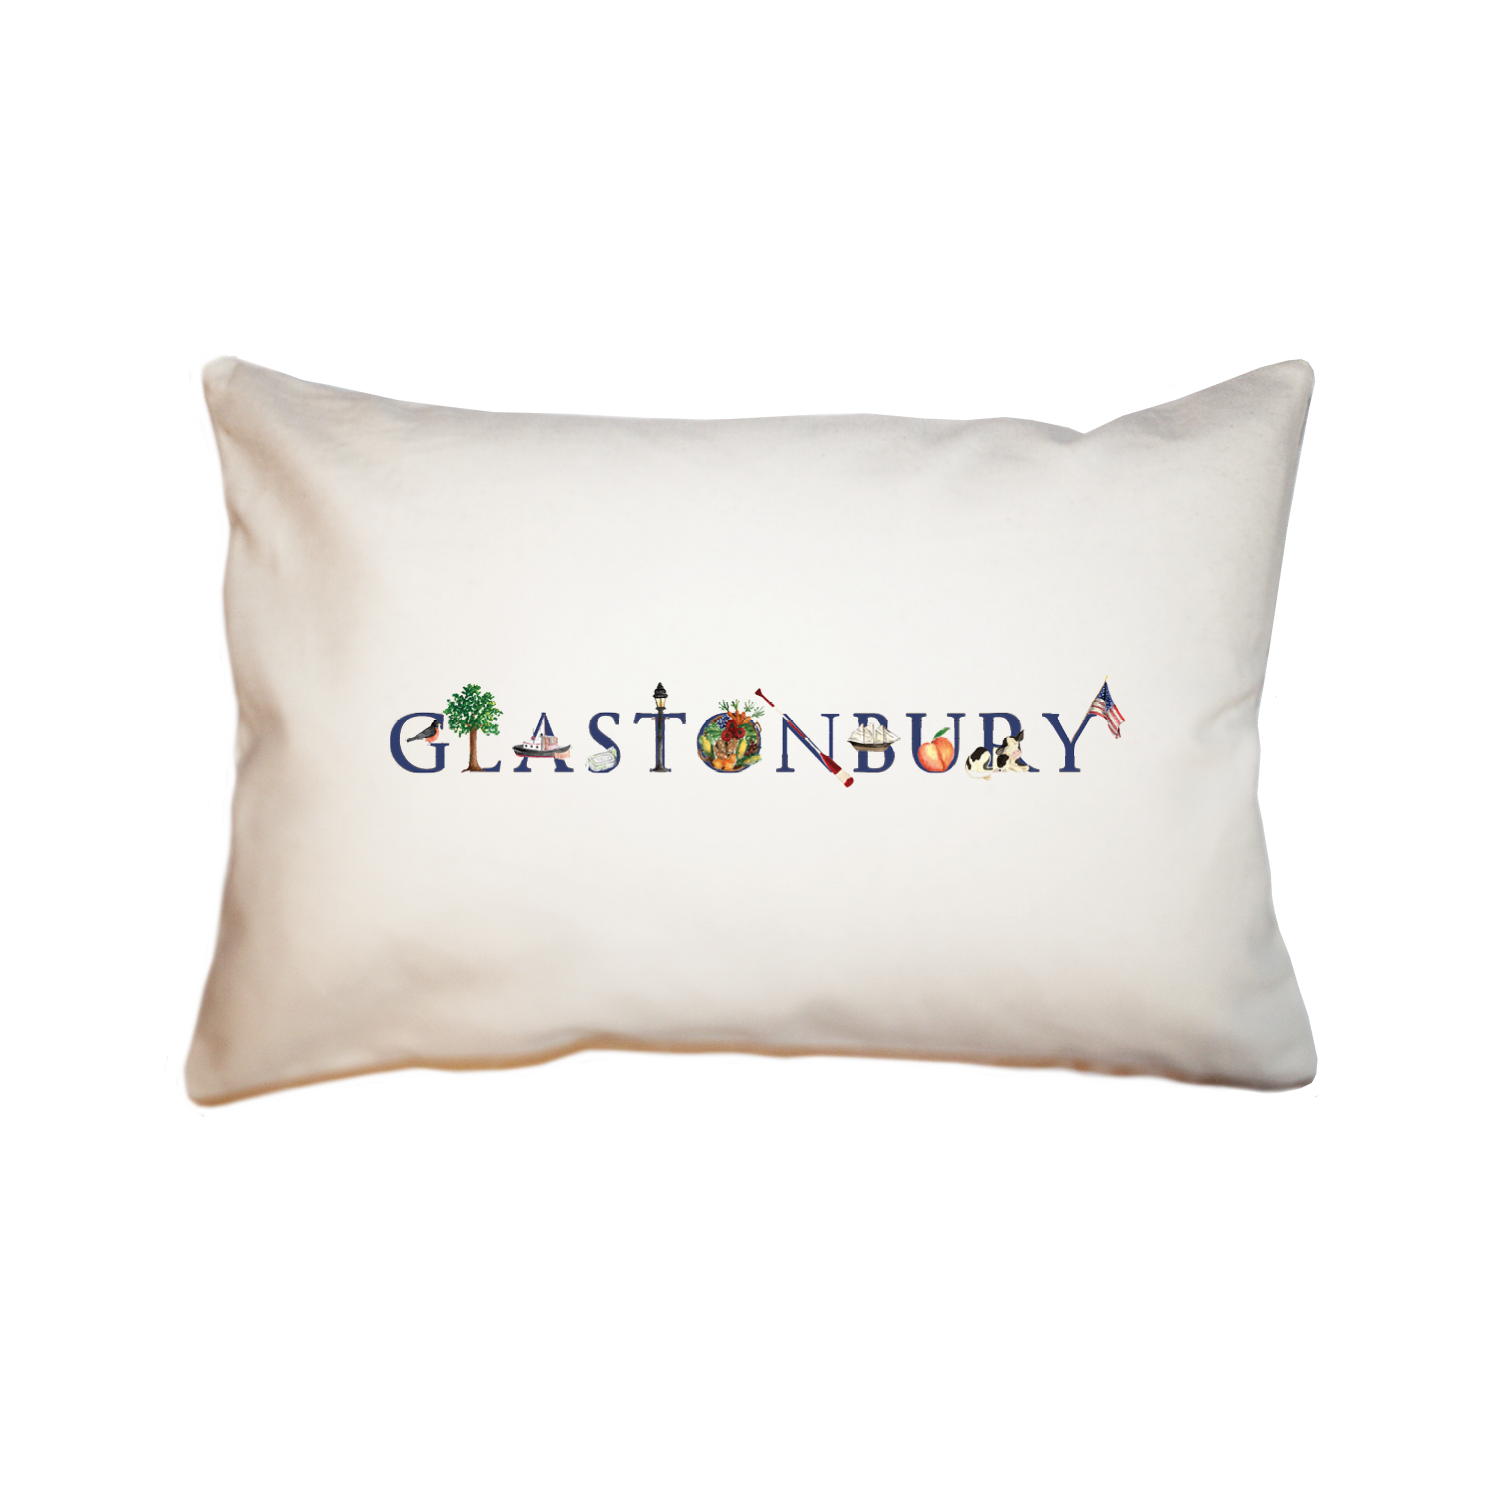 Glastonbury large rectangle pillow